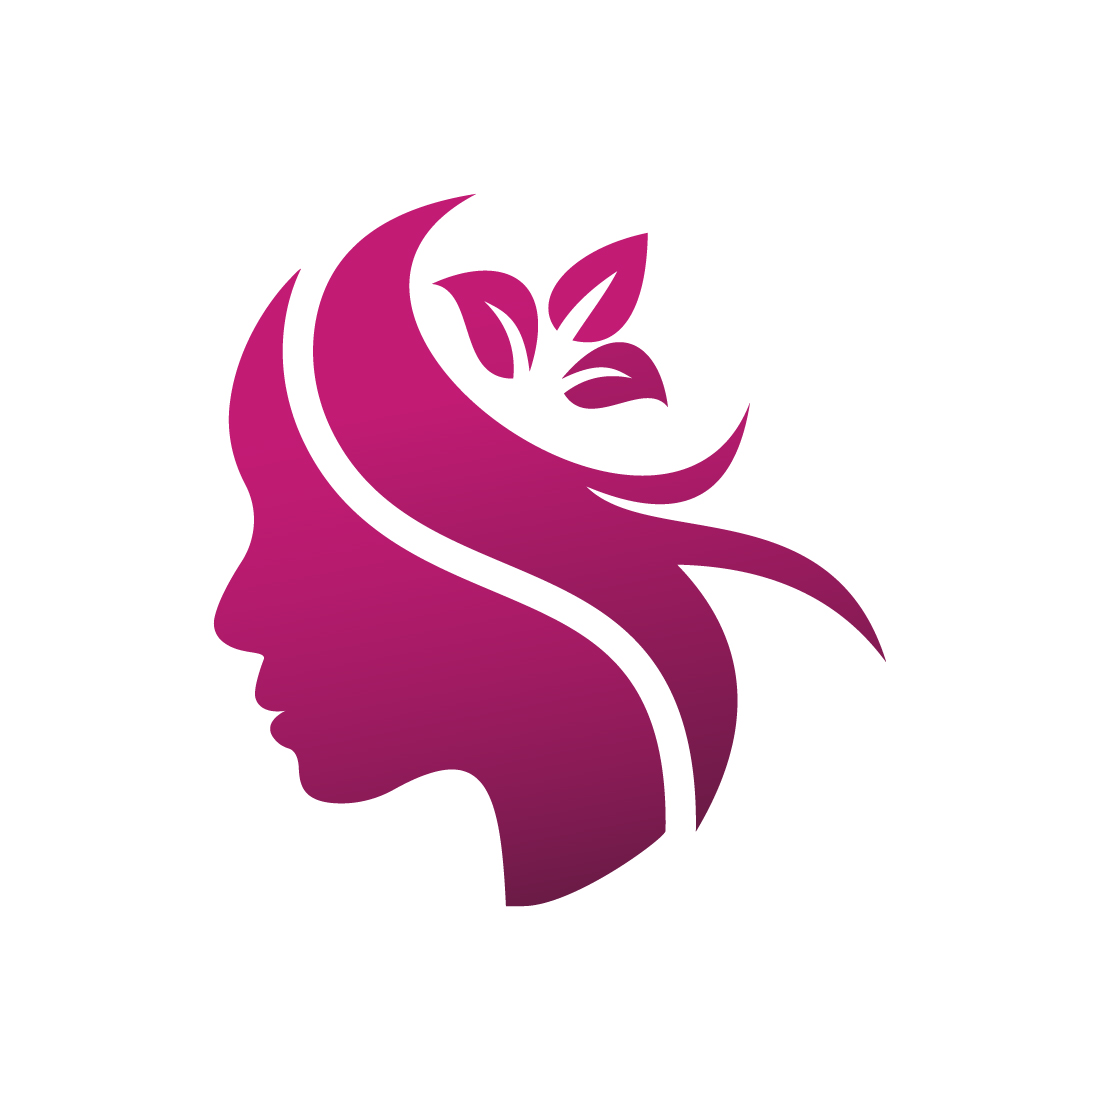 Beauty parlor, Skincare, Salon, Spa, Dermatology Clinic Flower Logo Design Vector design concept preview image.